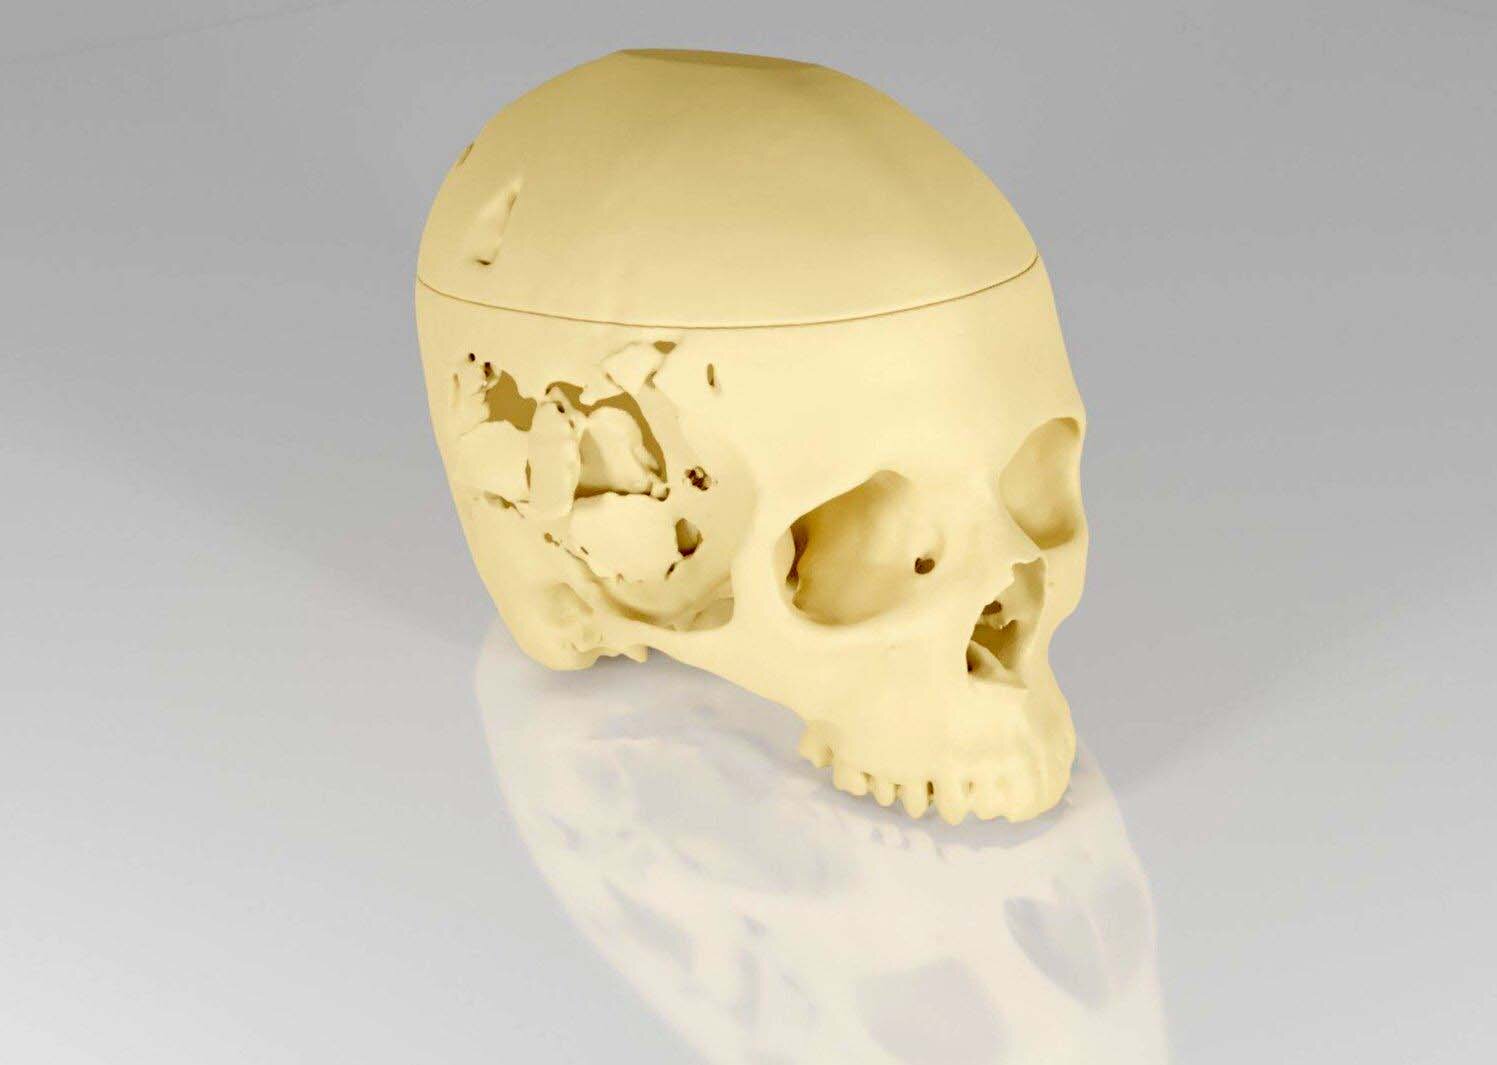 pre-op skull anatomical model